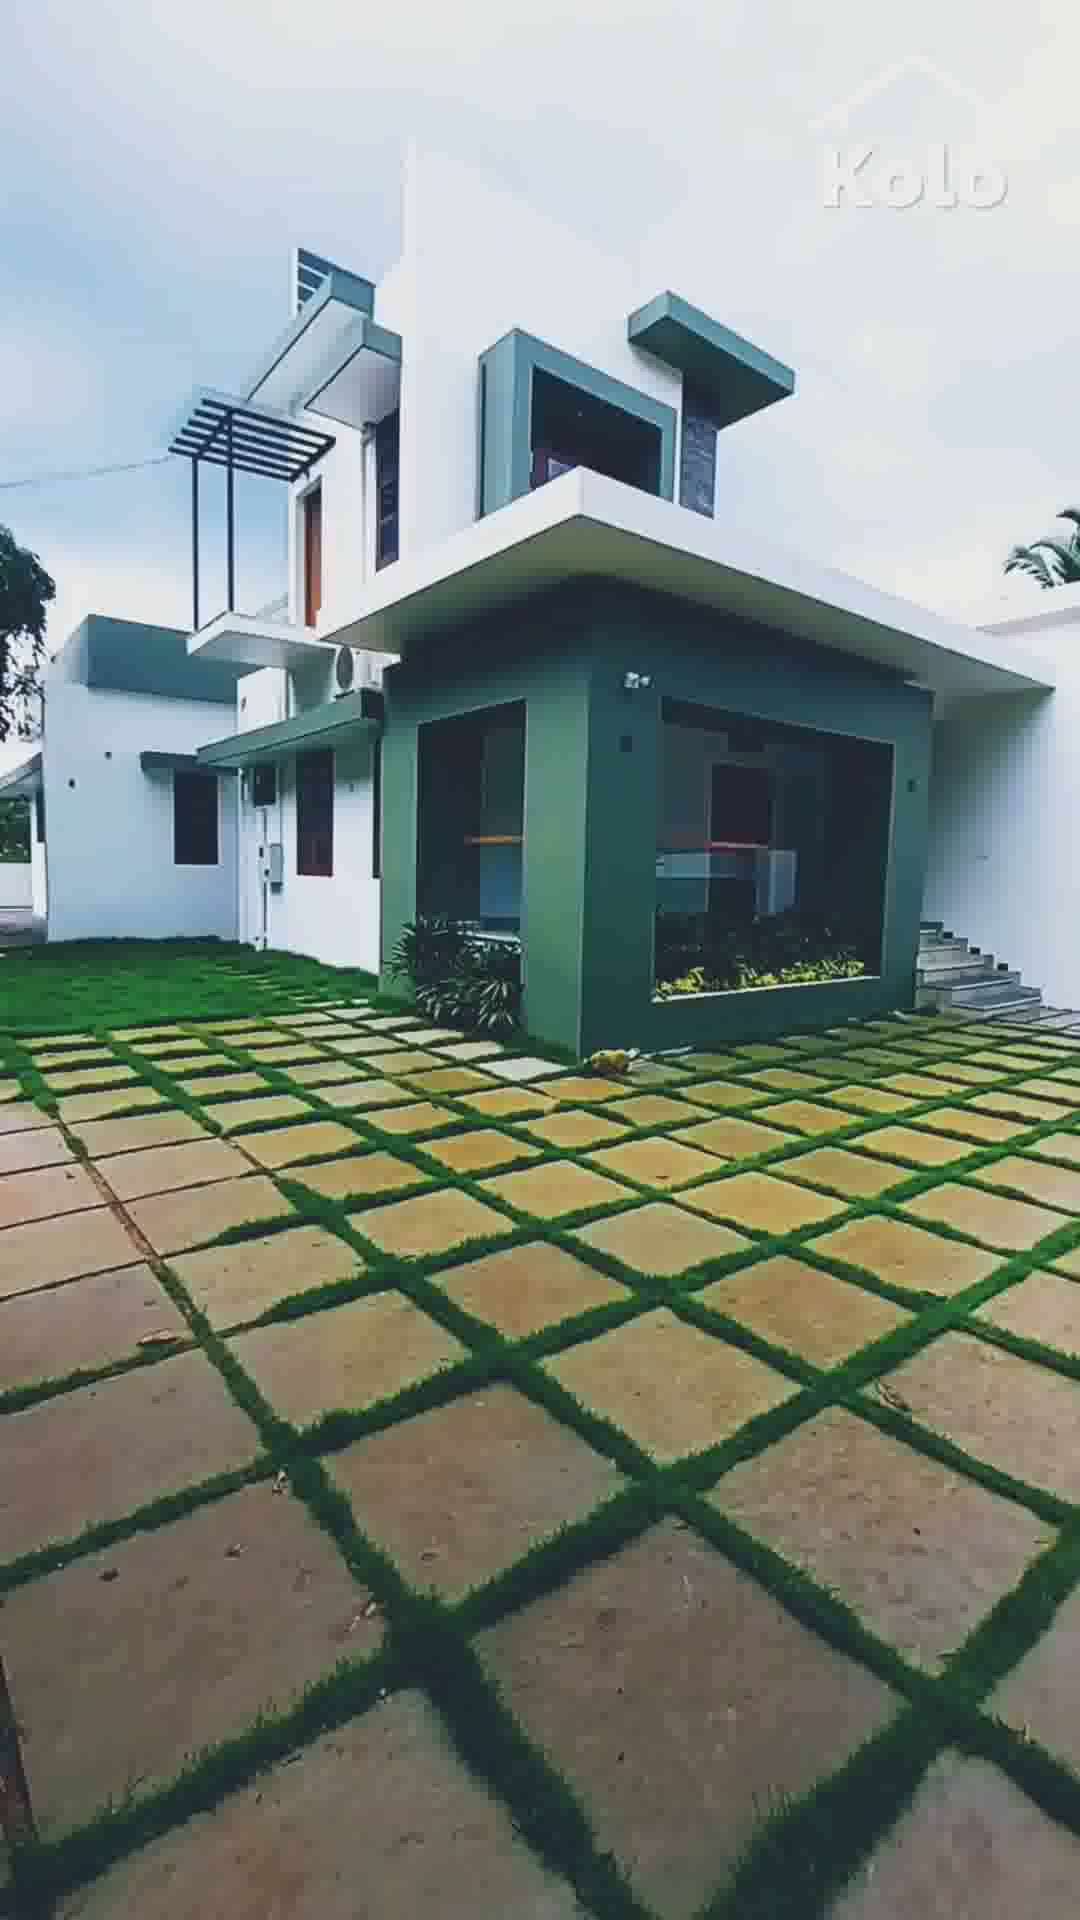 Designer: Nisam PT
Interior Designer
Malappuram, Kerala
Contact: 9037059910

Kolo App link: https://koloapp.in/posts/1628874879

Kolo - India’s Largest Home Construction Community :house:

#home #keralahouse #residence #residencedesign #house #koloapp #keralagram #reelitfeelit #keralagodsowncountry #homedecor #homedesign #keralahomedesignz #keralavibes #instagood #interiordesign #interior #interiordesigner #homedecoration #homedesignideas #keralahomes #homedecor #homes #traditional #kerala #homesweethome #architecturedesign #architecture #keralaarchitecture